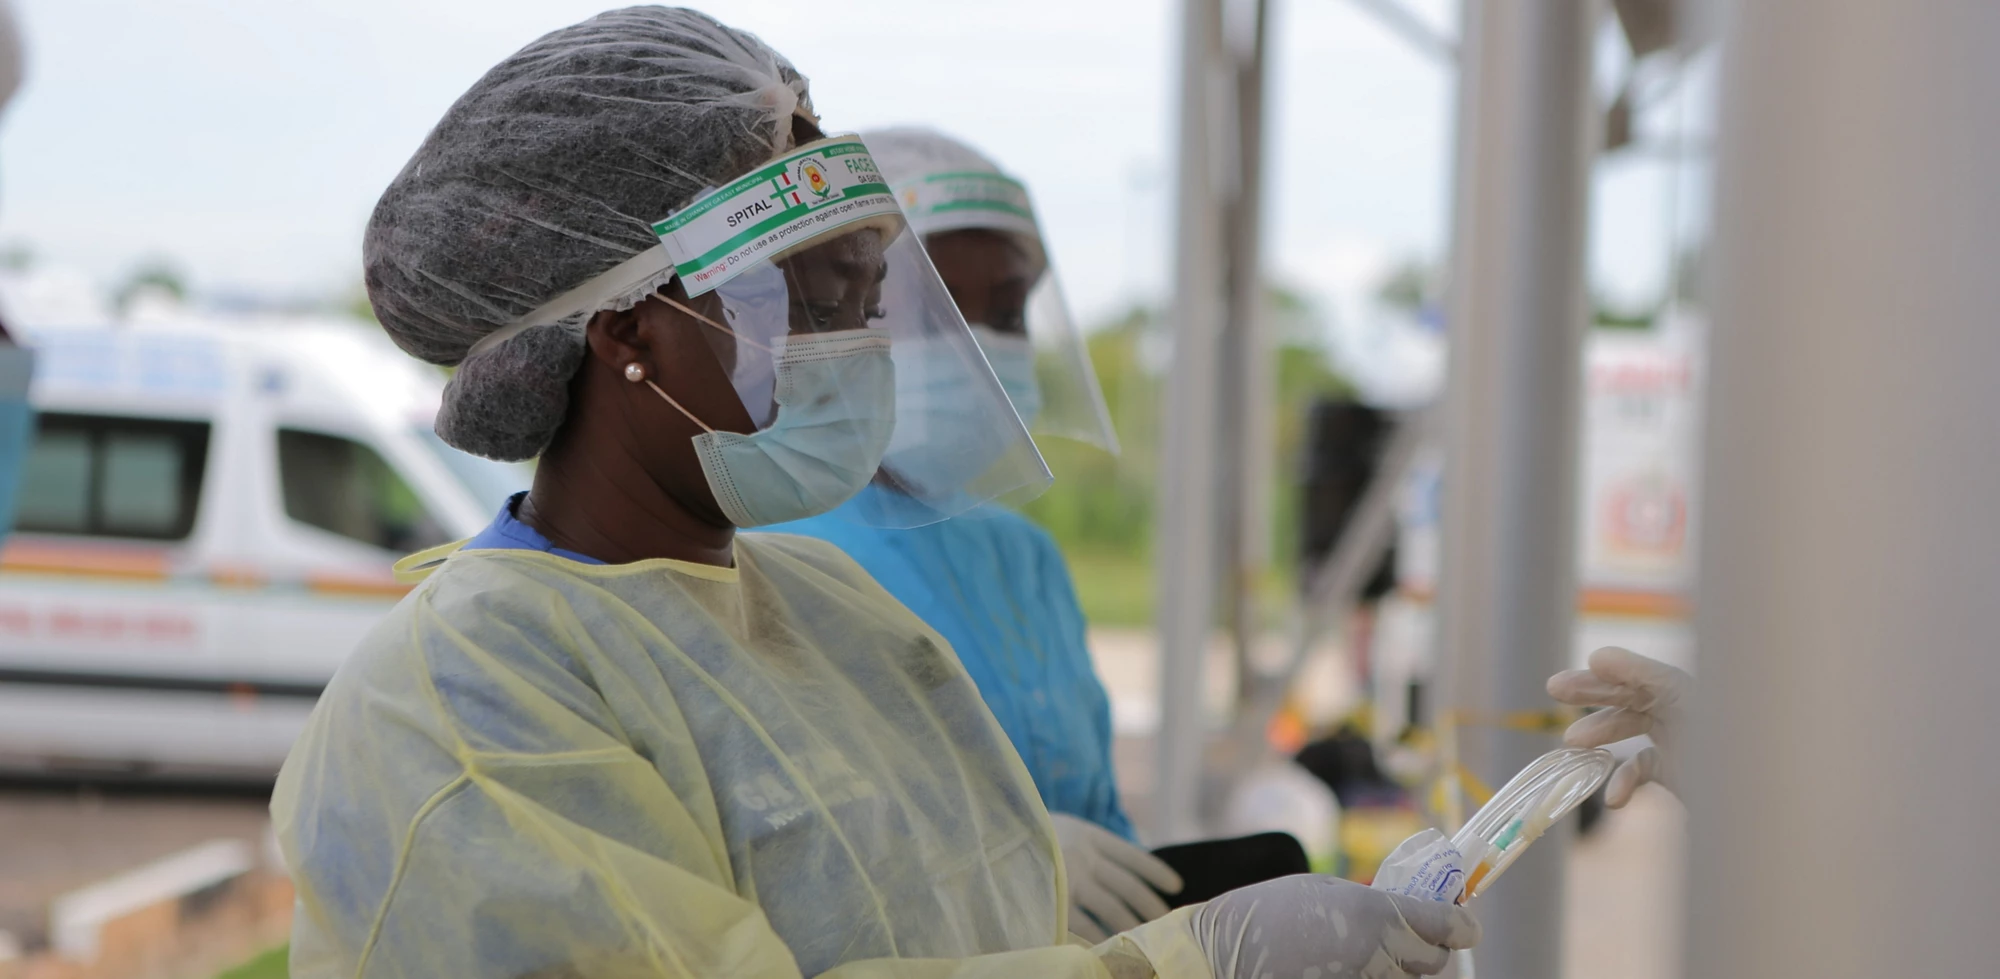 Preparing medical supplies in Ghana.  Photo credit: Rodney Quarcoo/World Bank